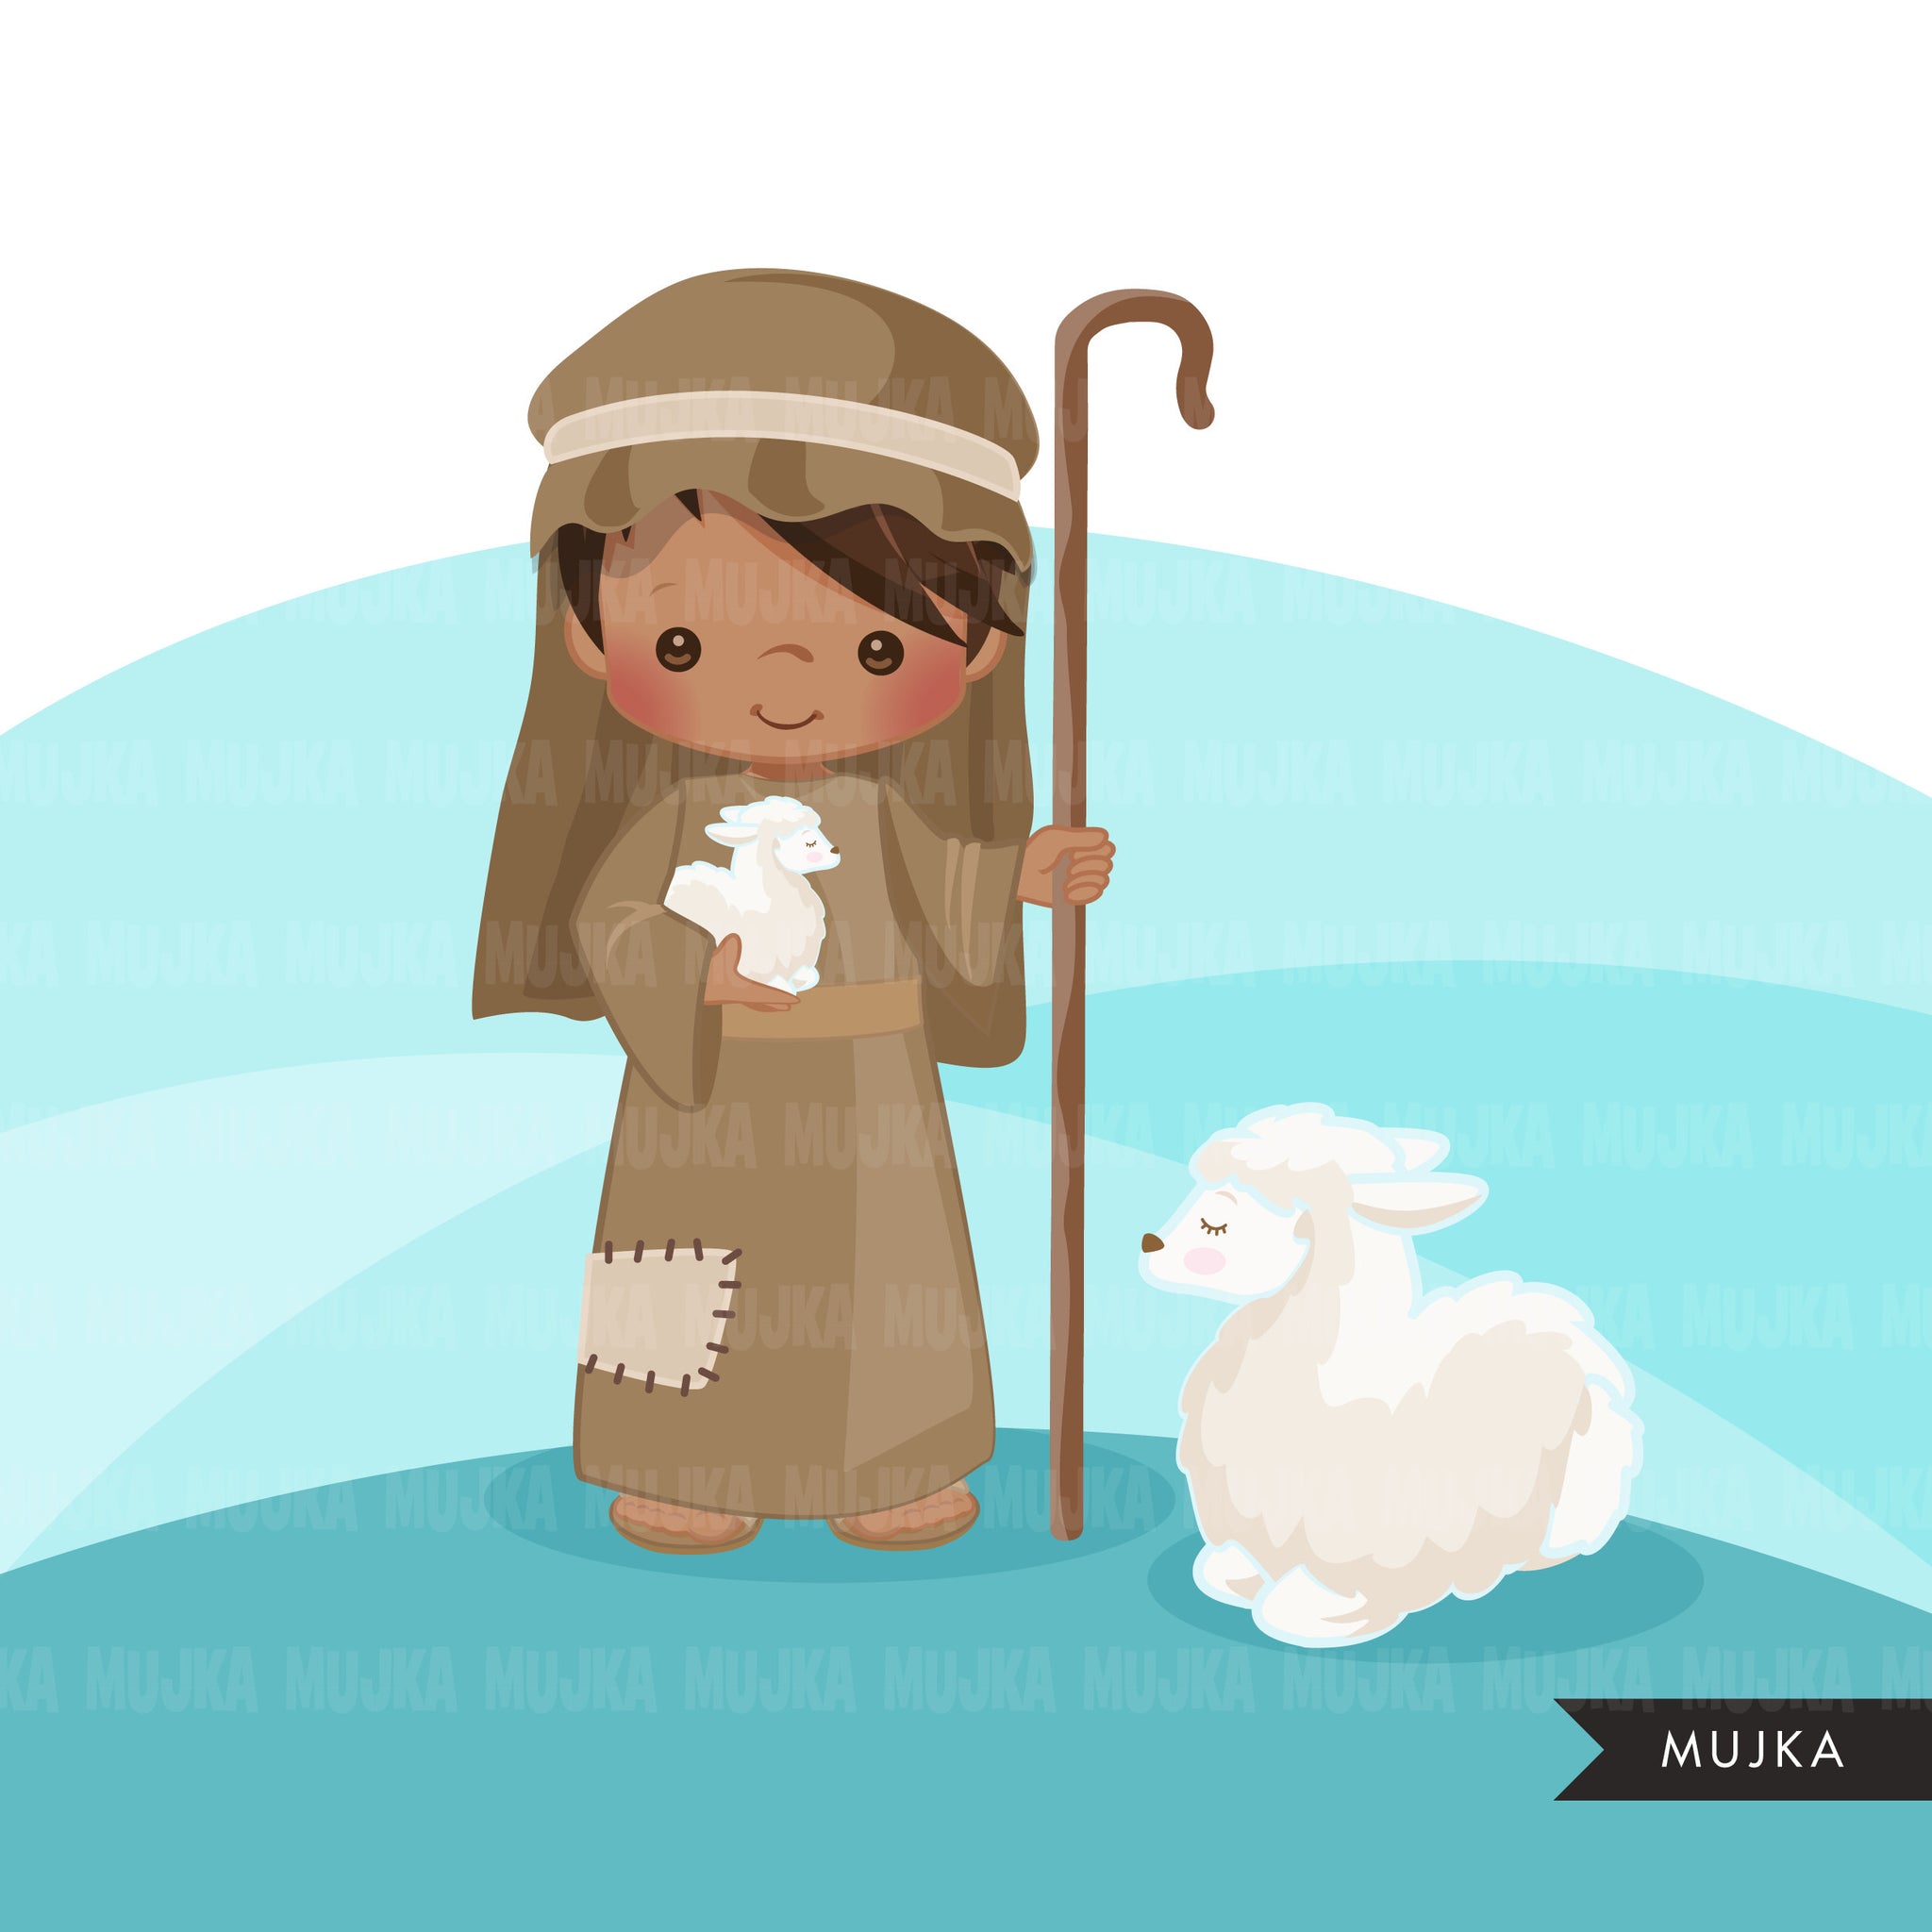 Nativity Clipart, boy shepherd with baby animal sheep religious